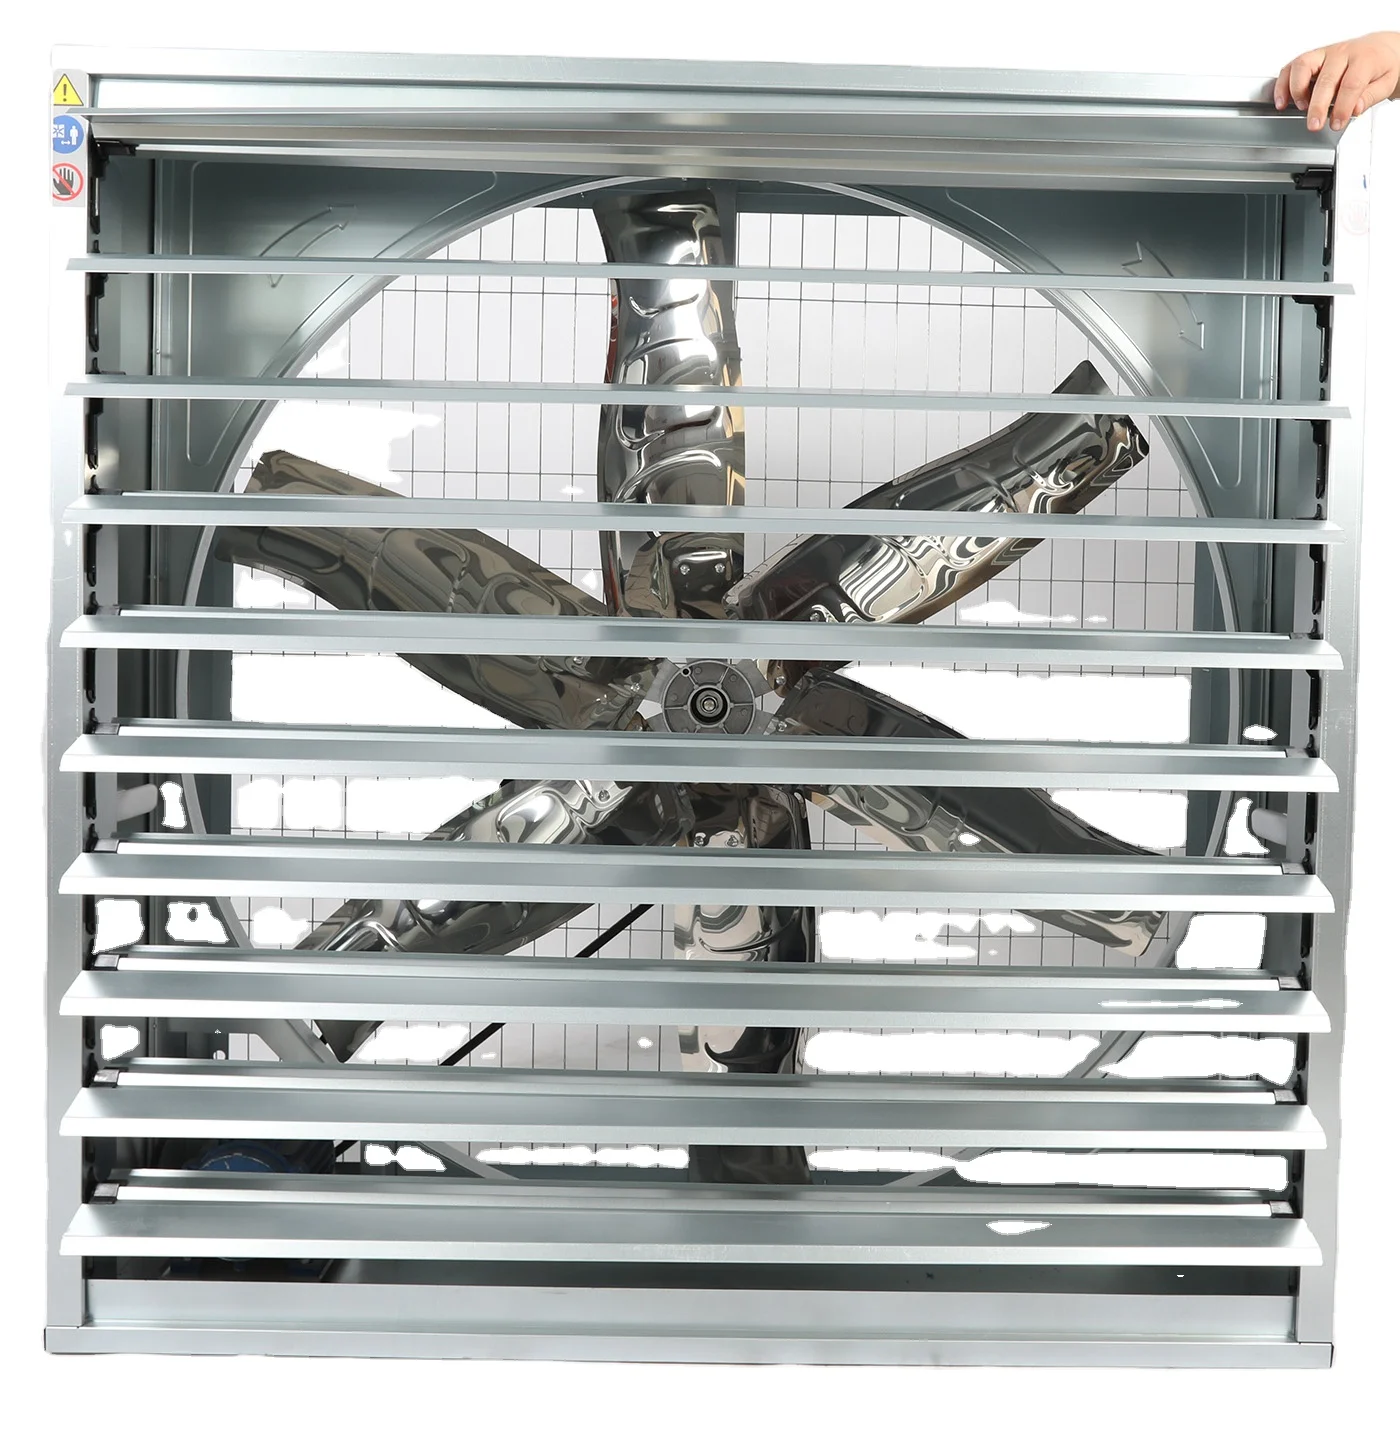 Hot sale china manufacture quality FTB1380 HAMMER FAN large industrial exhaust fan(environmental friendly) ventilation fan